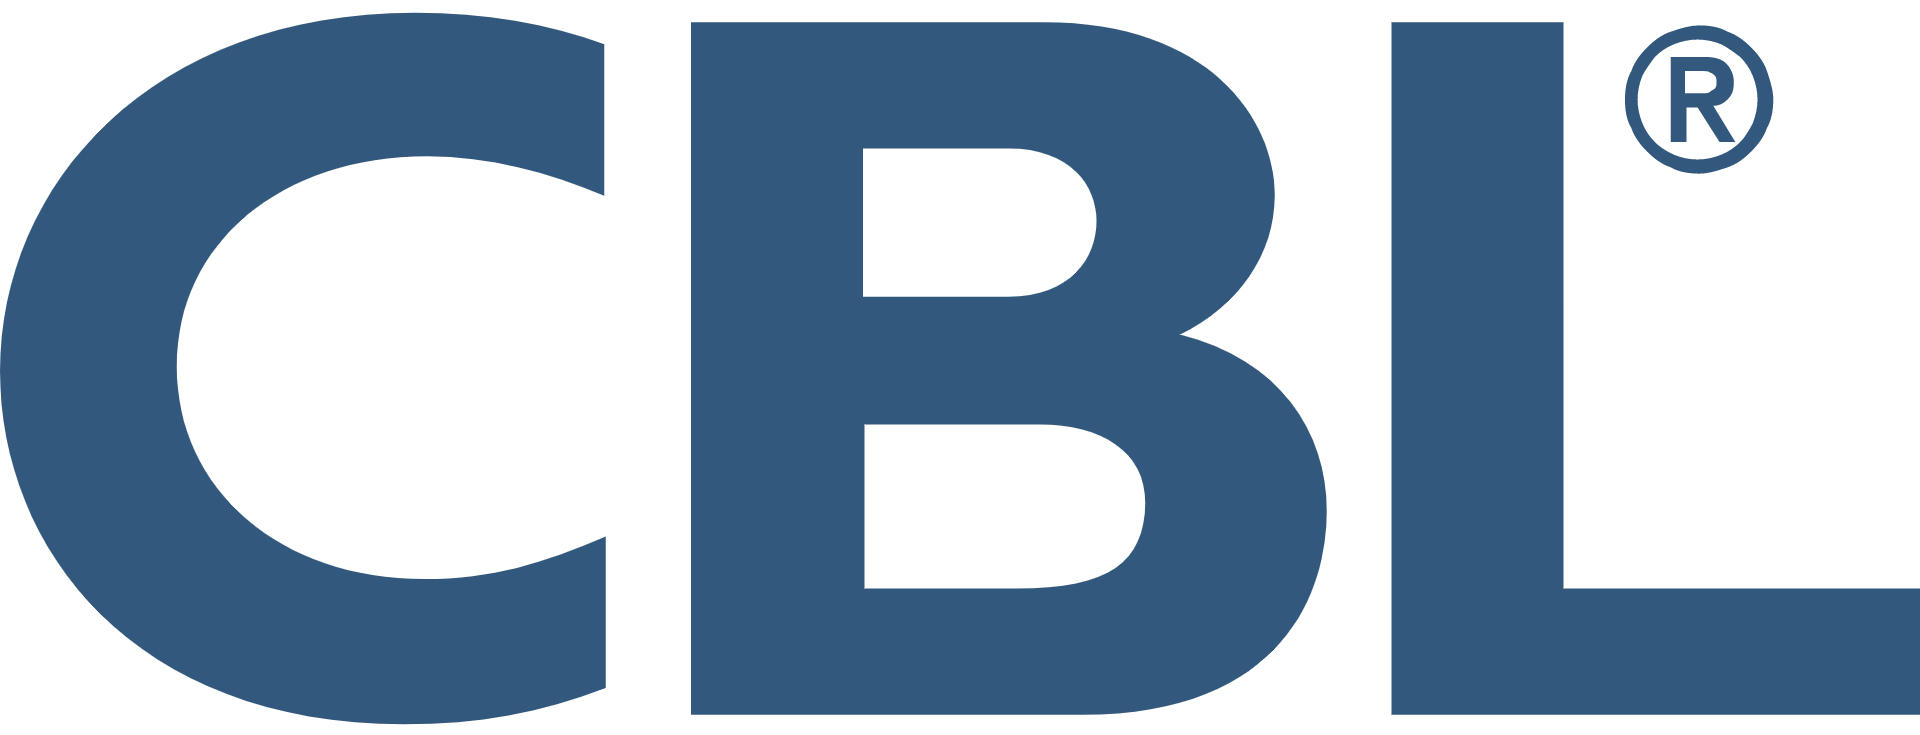 CBL Properties Company Logo